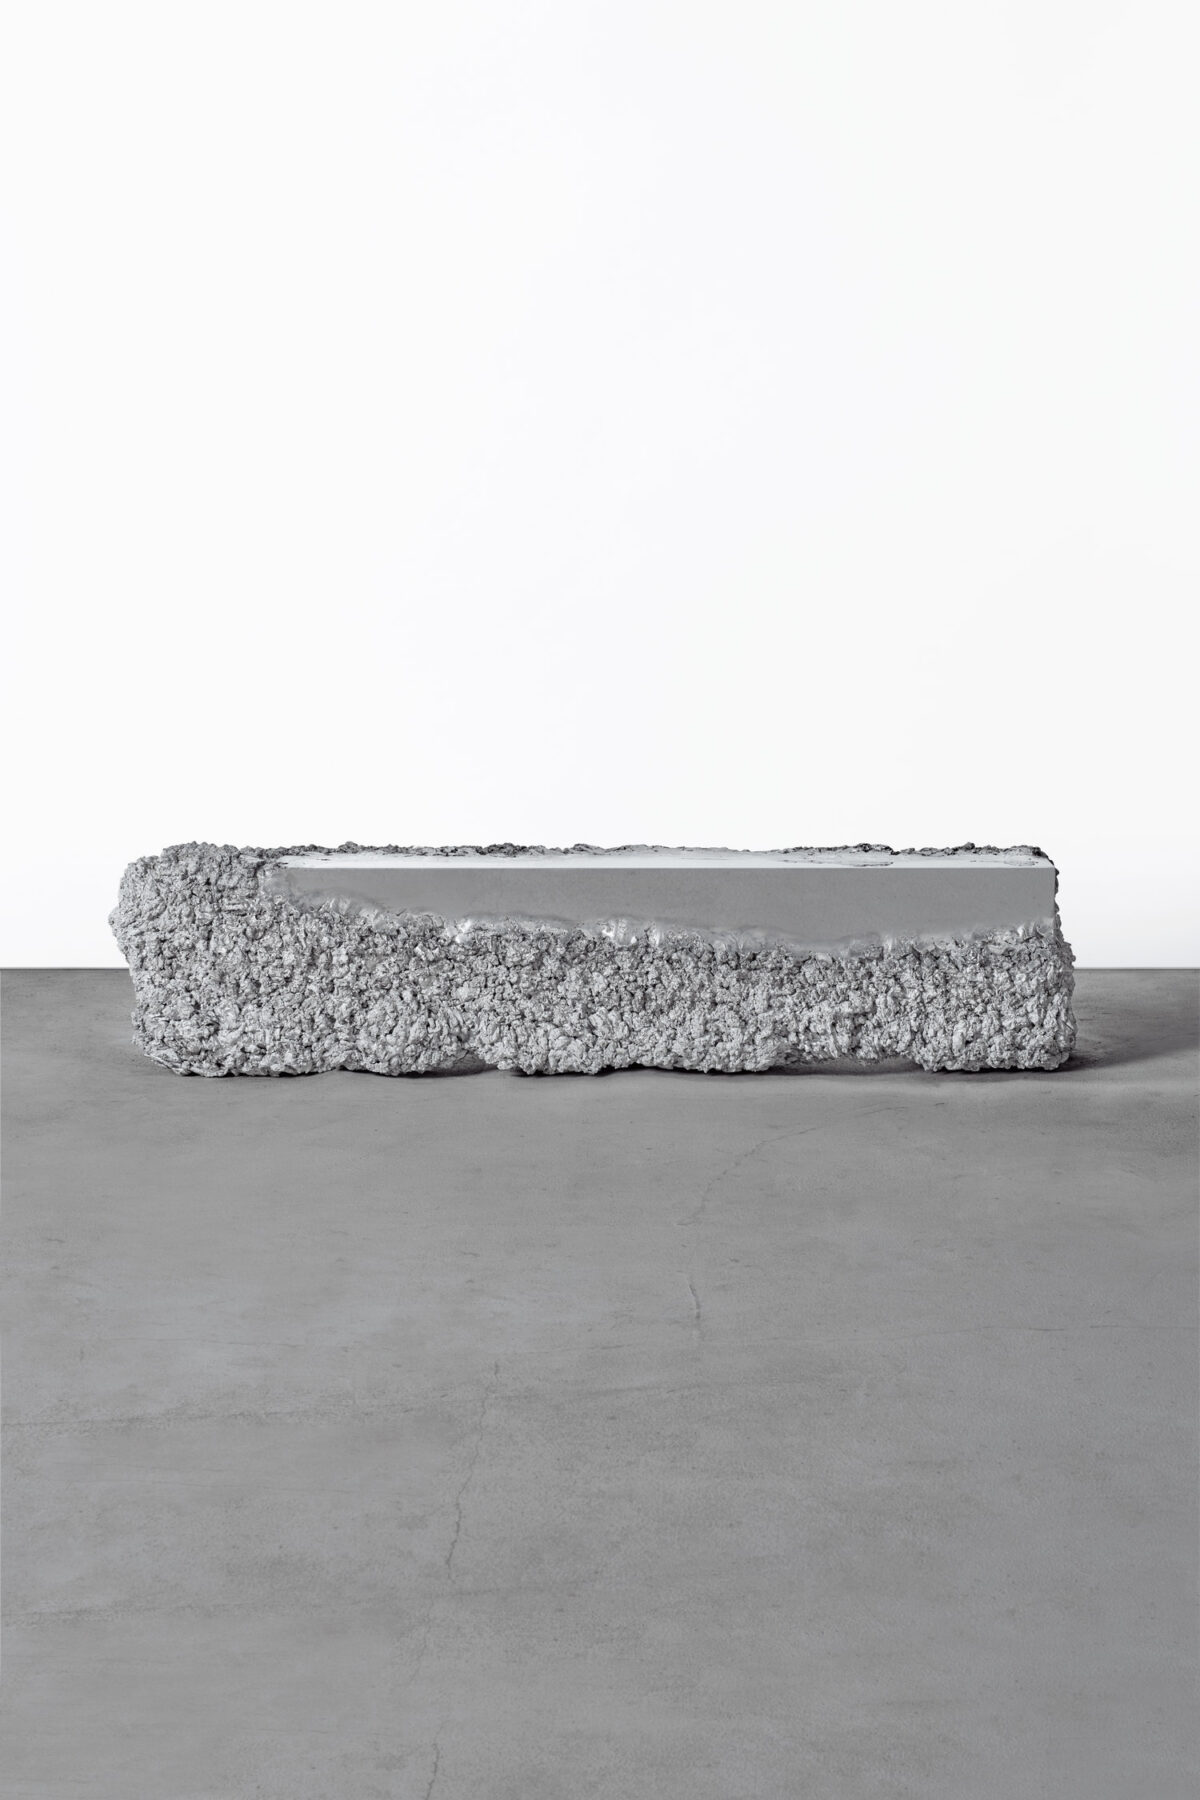 Monoliths Intriguing Sculptural Pieces Of Furniture By Hongjie Yang (8)